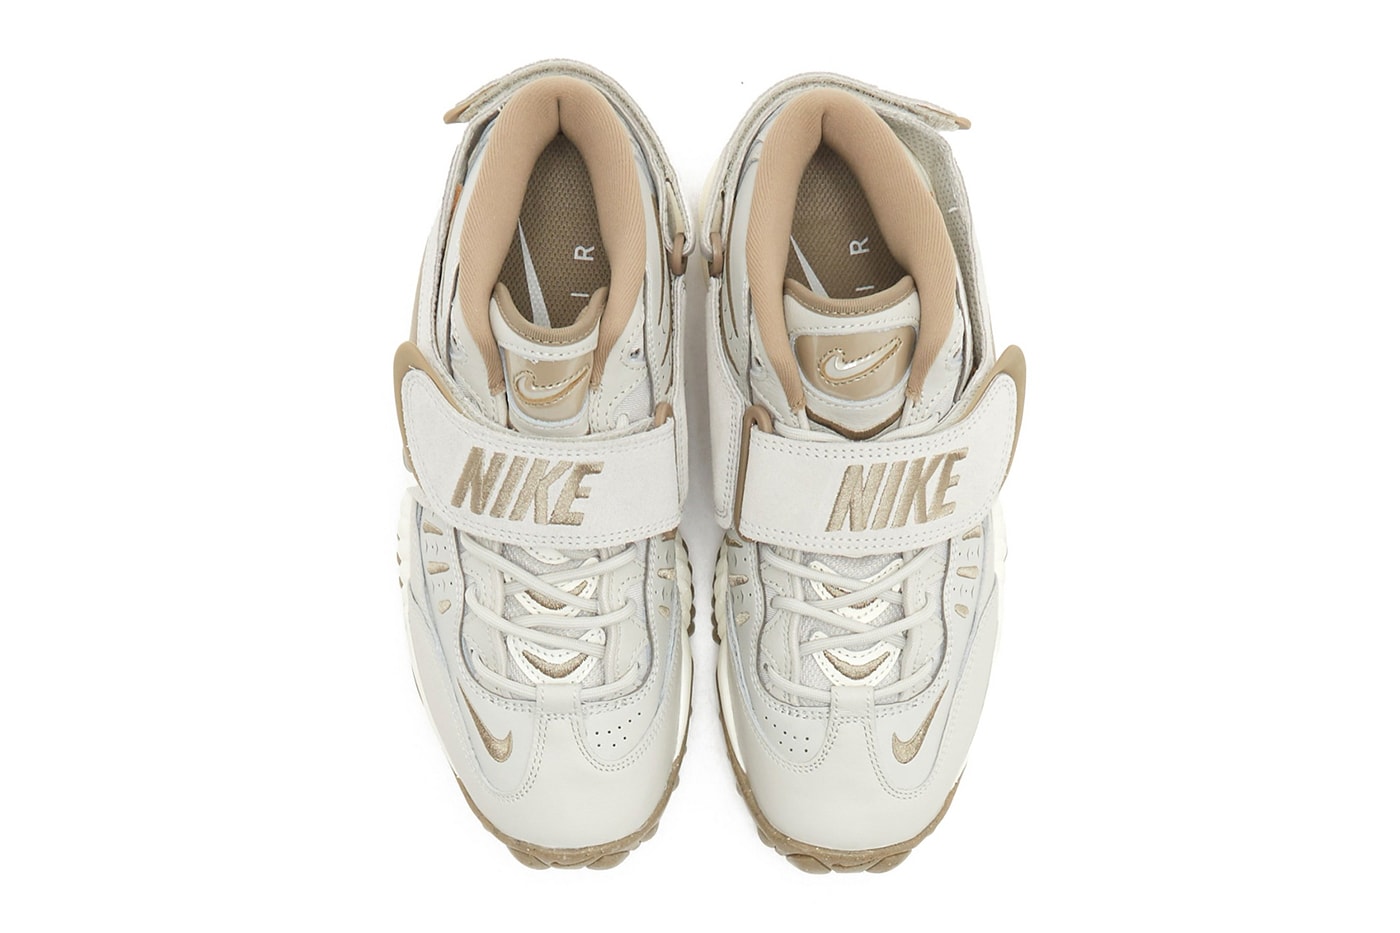 Nike Air Adjust Force Surfaces in "Light Bone/Khaki"  DZ1844-200 Khaki/Light Bone/Gum Medium Brown swoosh sneakers shoes chunky dad shoes velcro strap